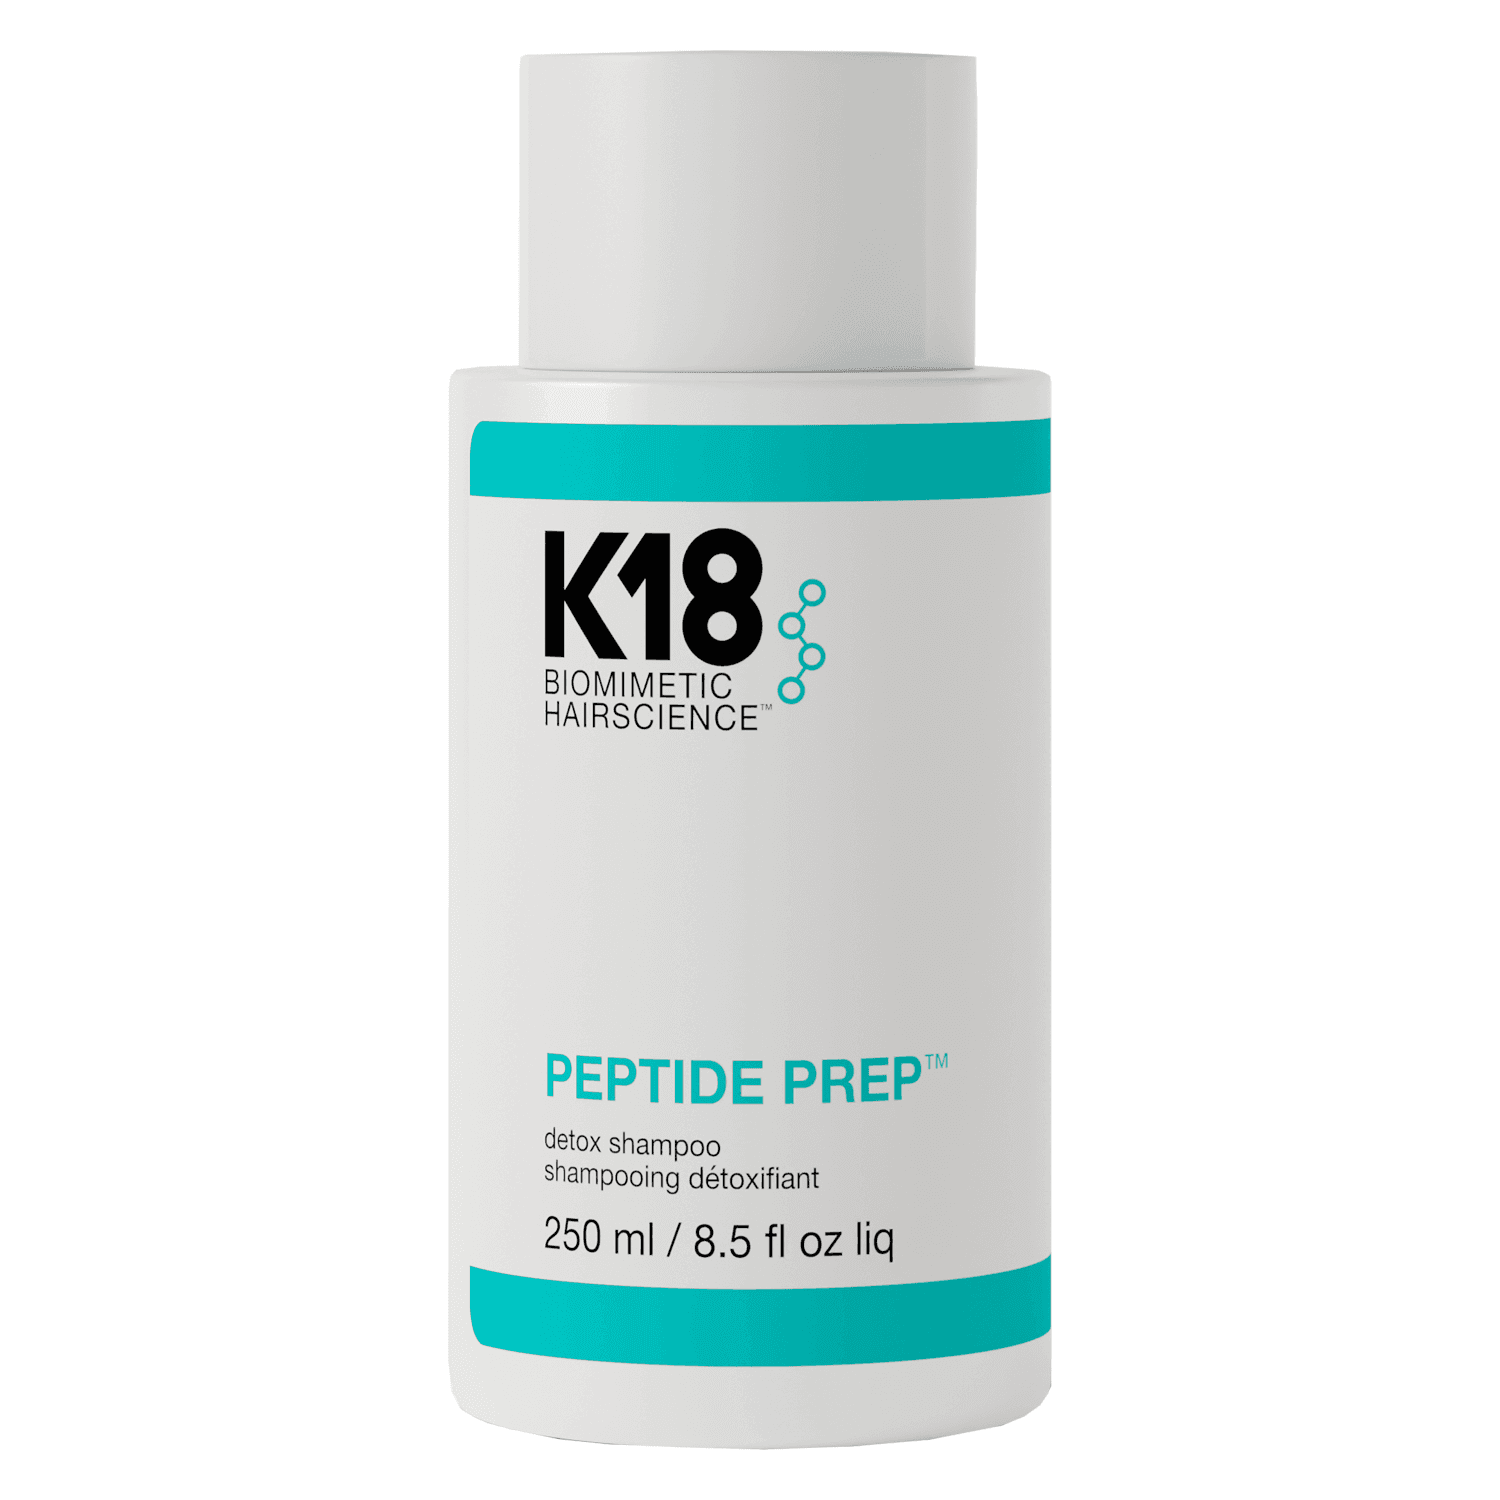 K18 Biomimetic Hairscience - PEPTIDE PREP detox shampoo